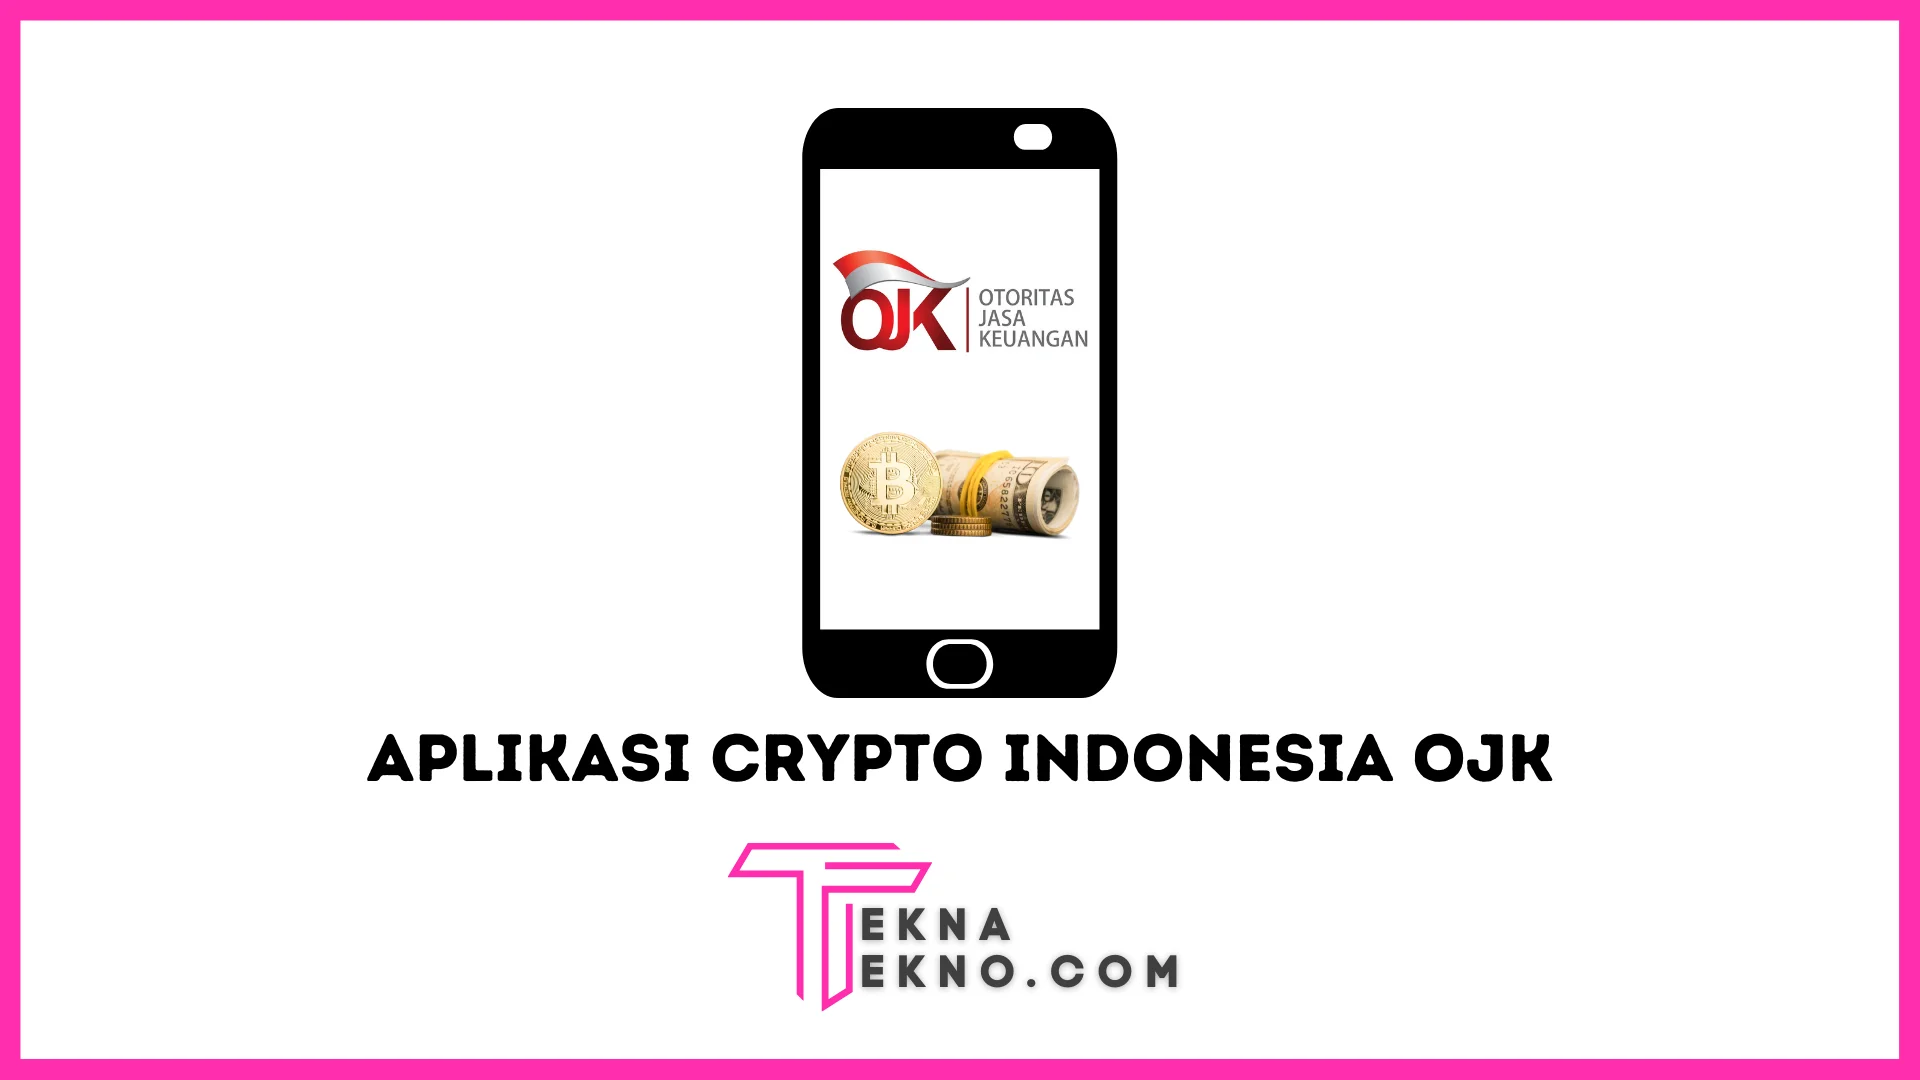 Aplikasi Crypto Indonesia OJK Legal dan Resmi